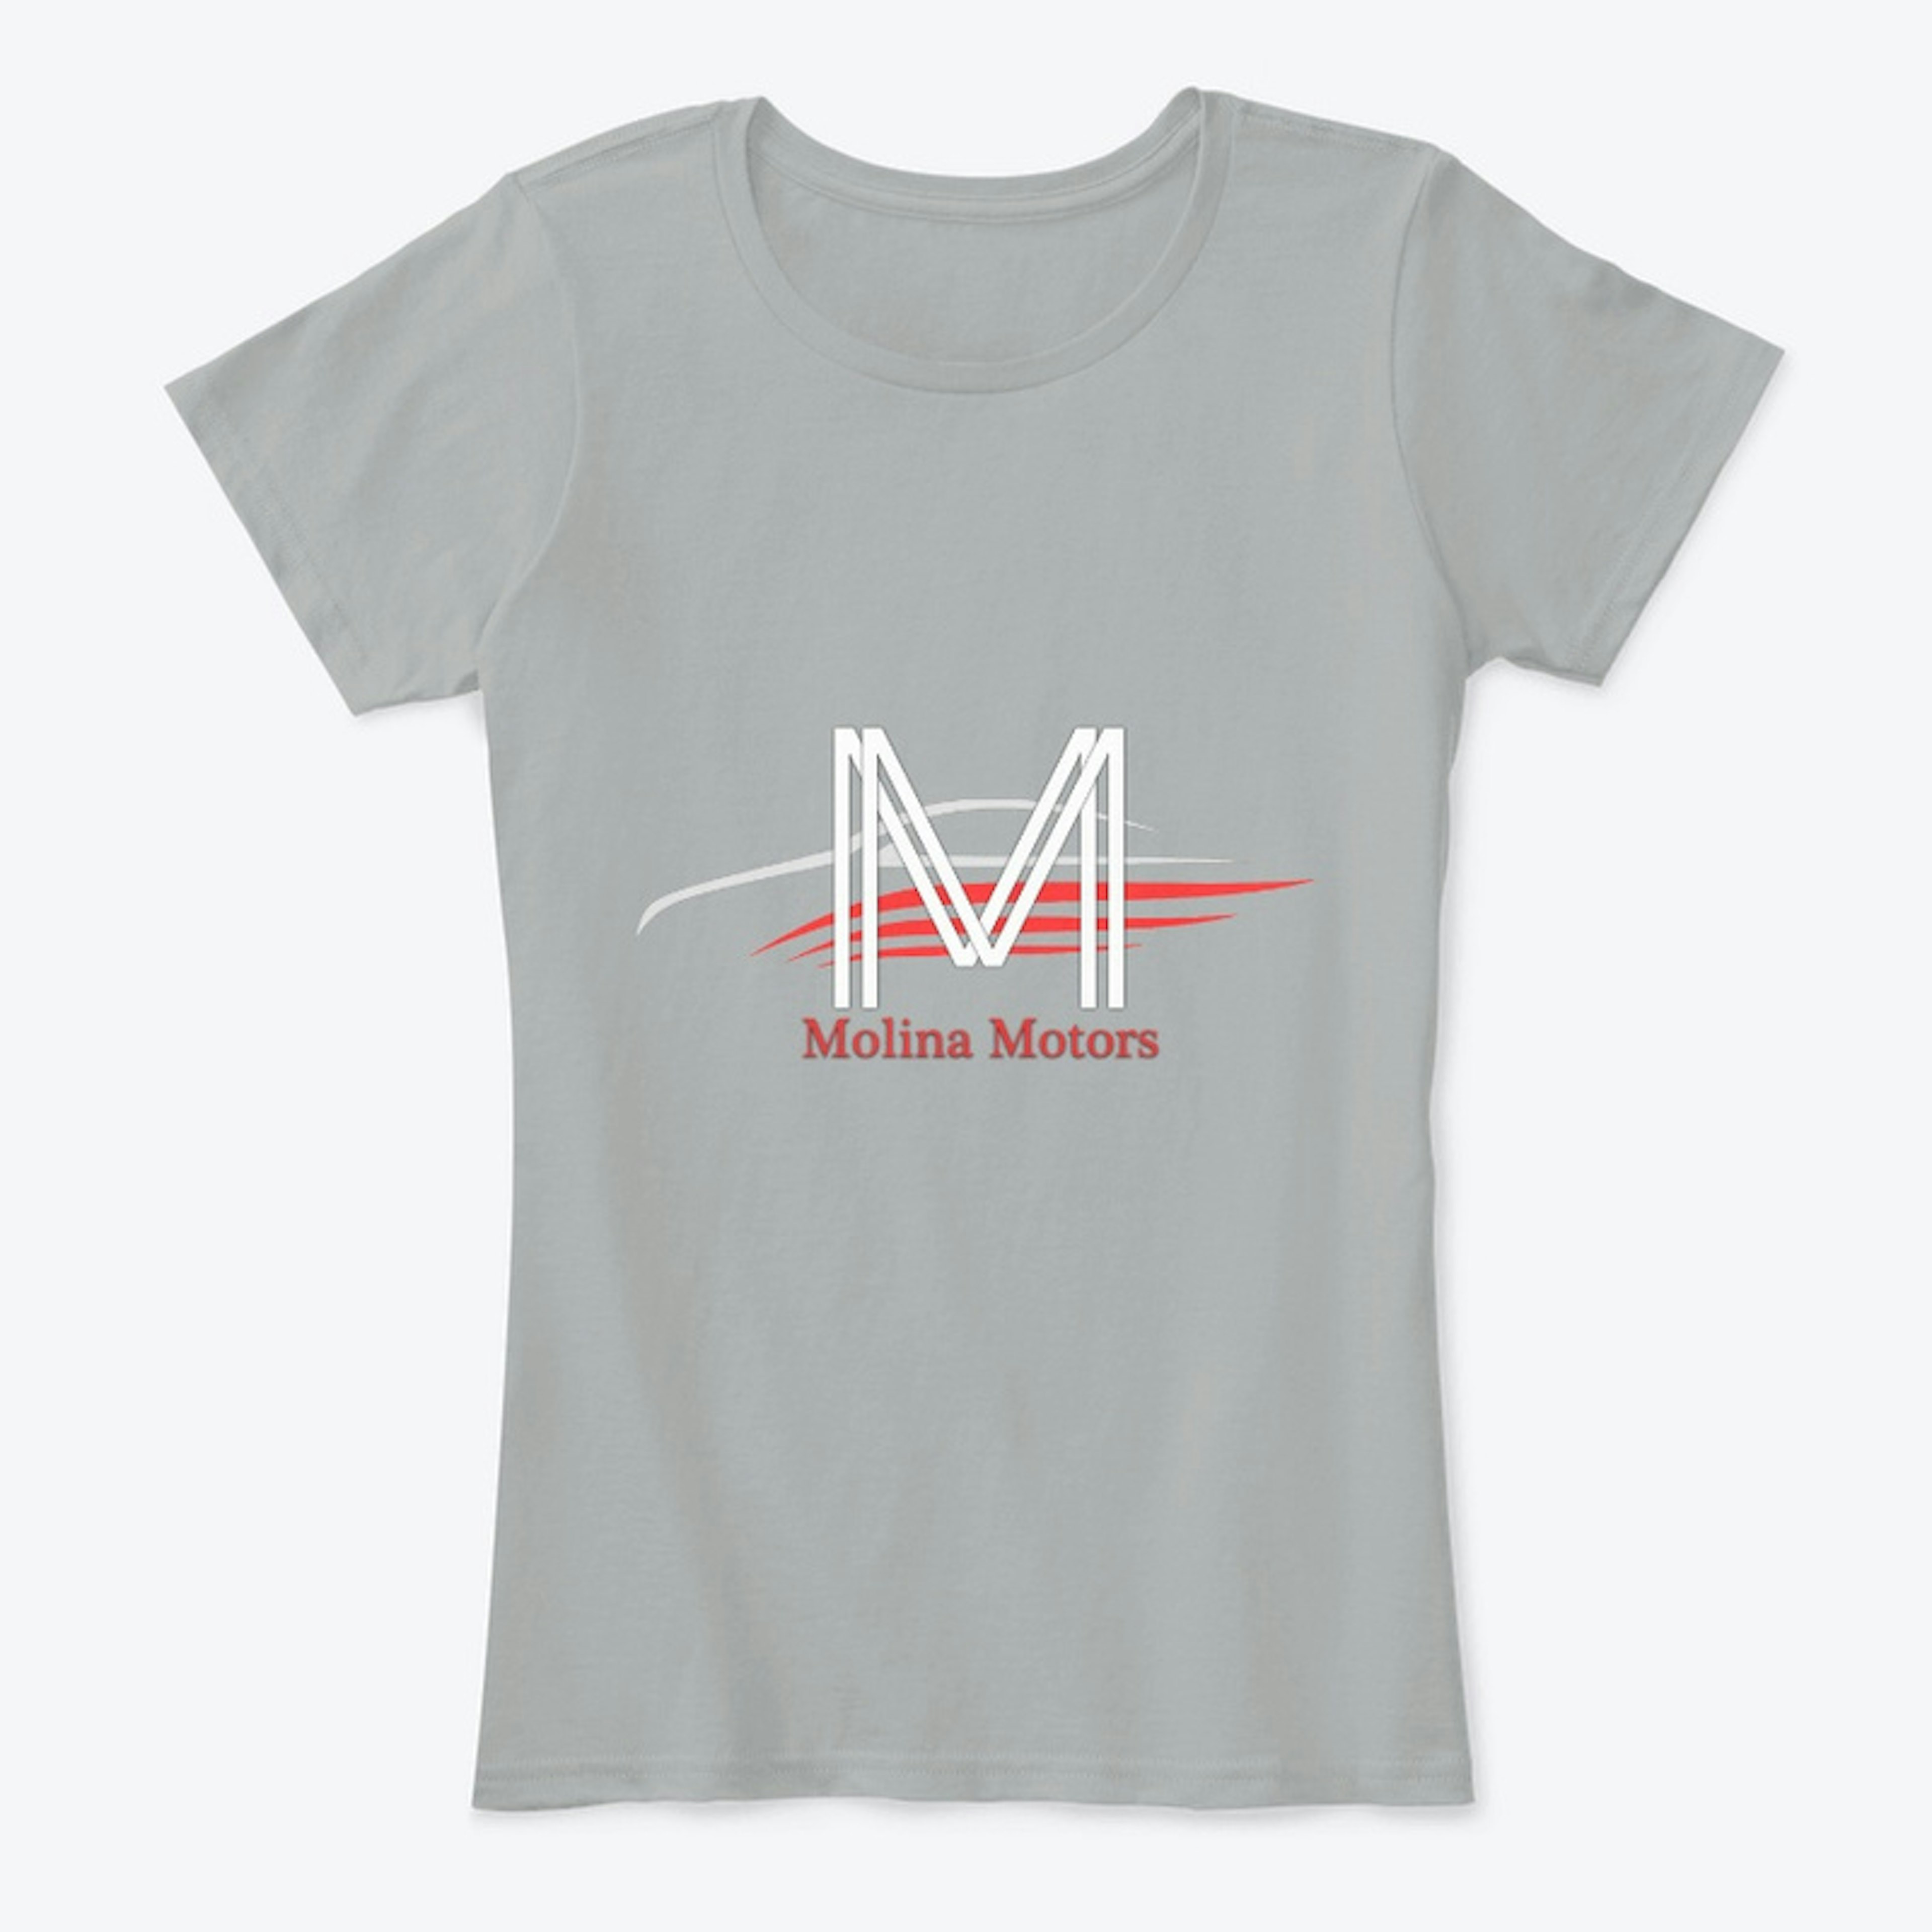 Molina Motors White and Red Logo Tee